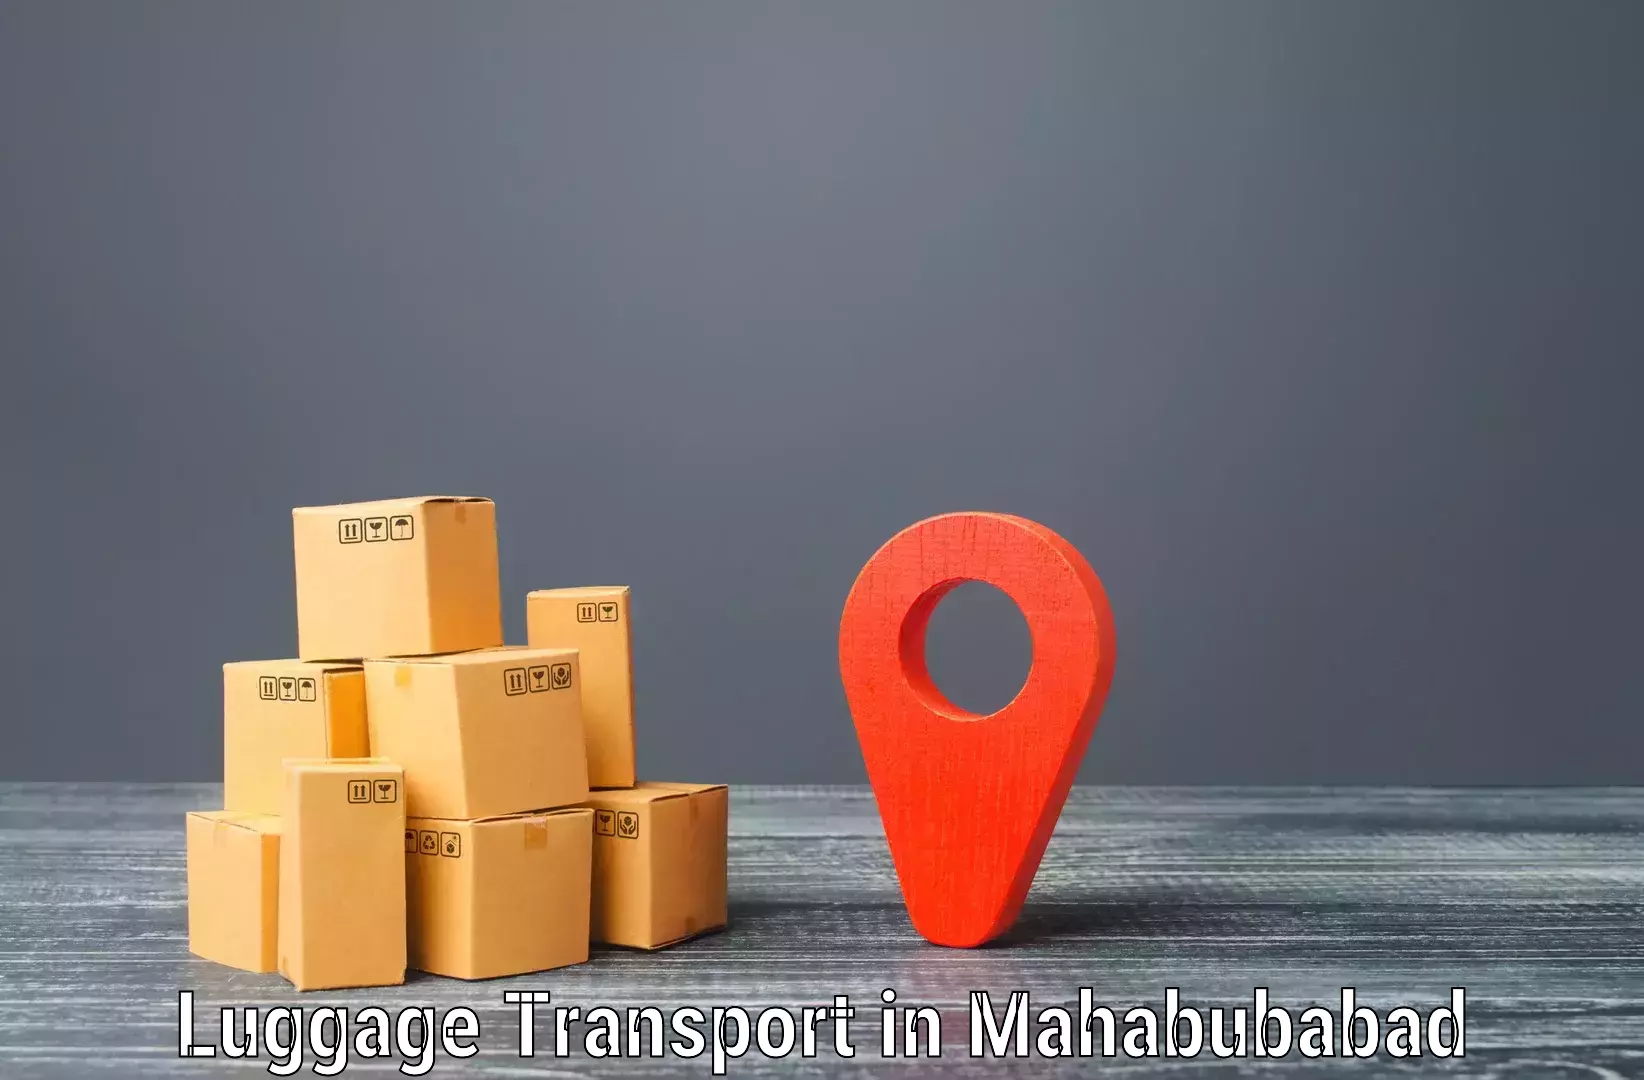 Baggage transport scheduler in Mahabubabad